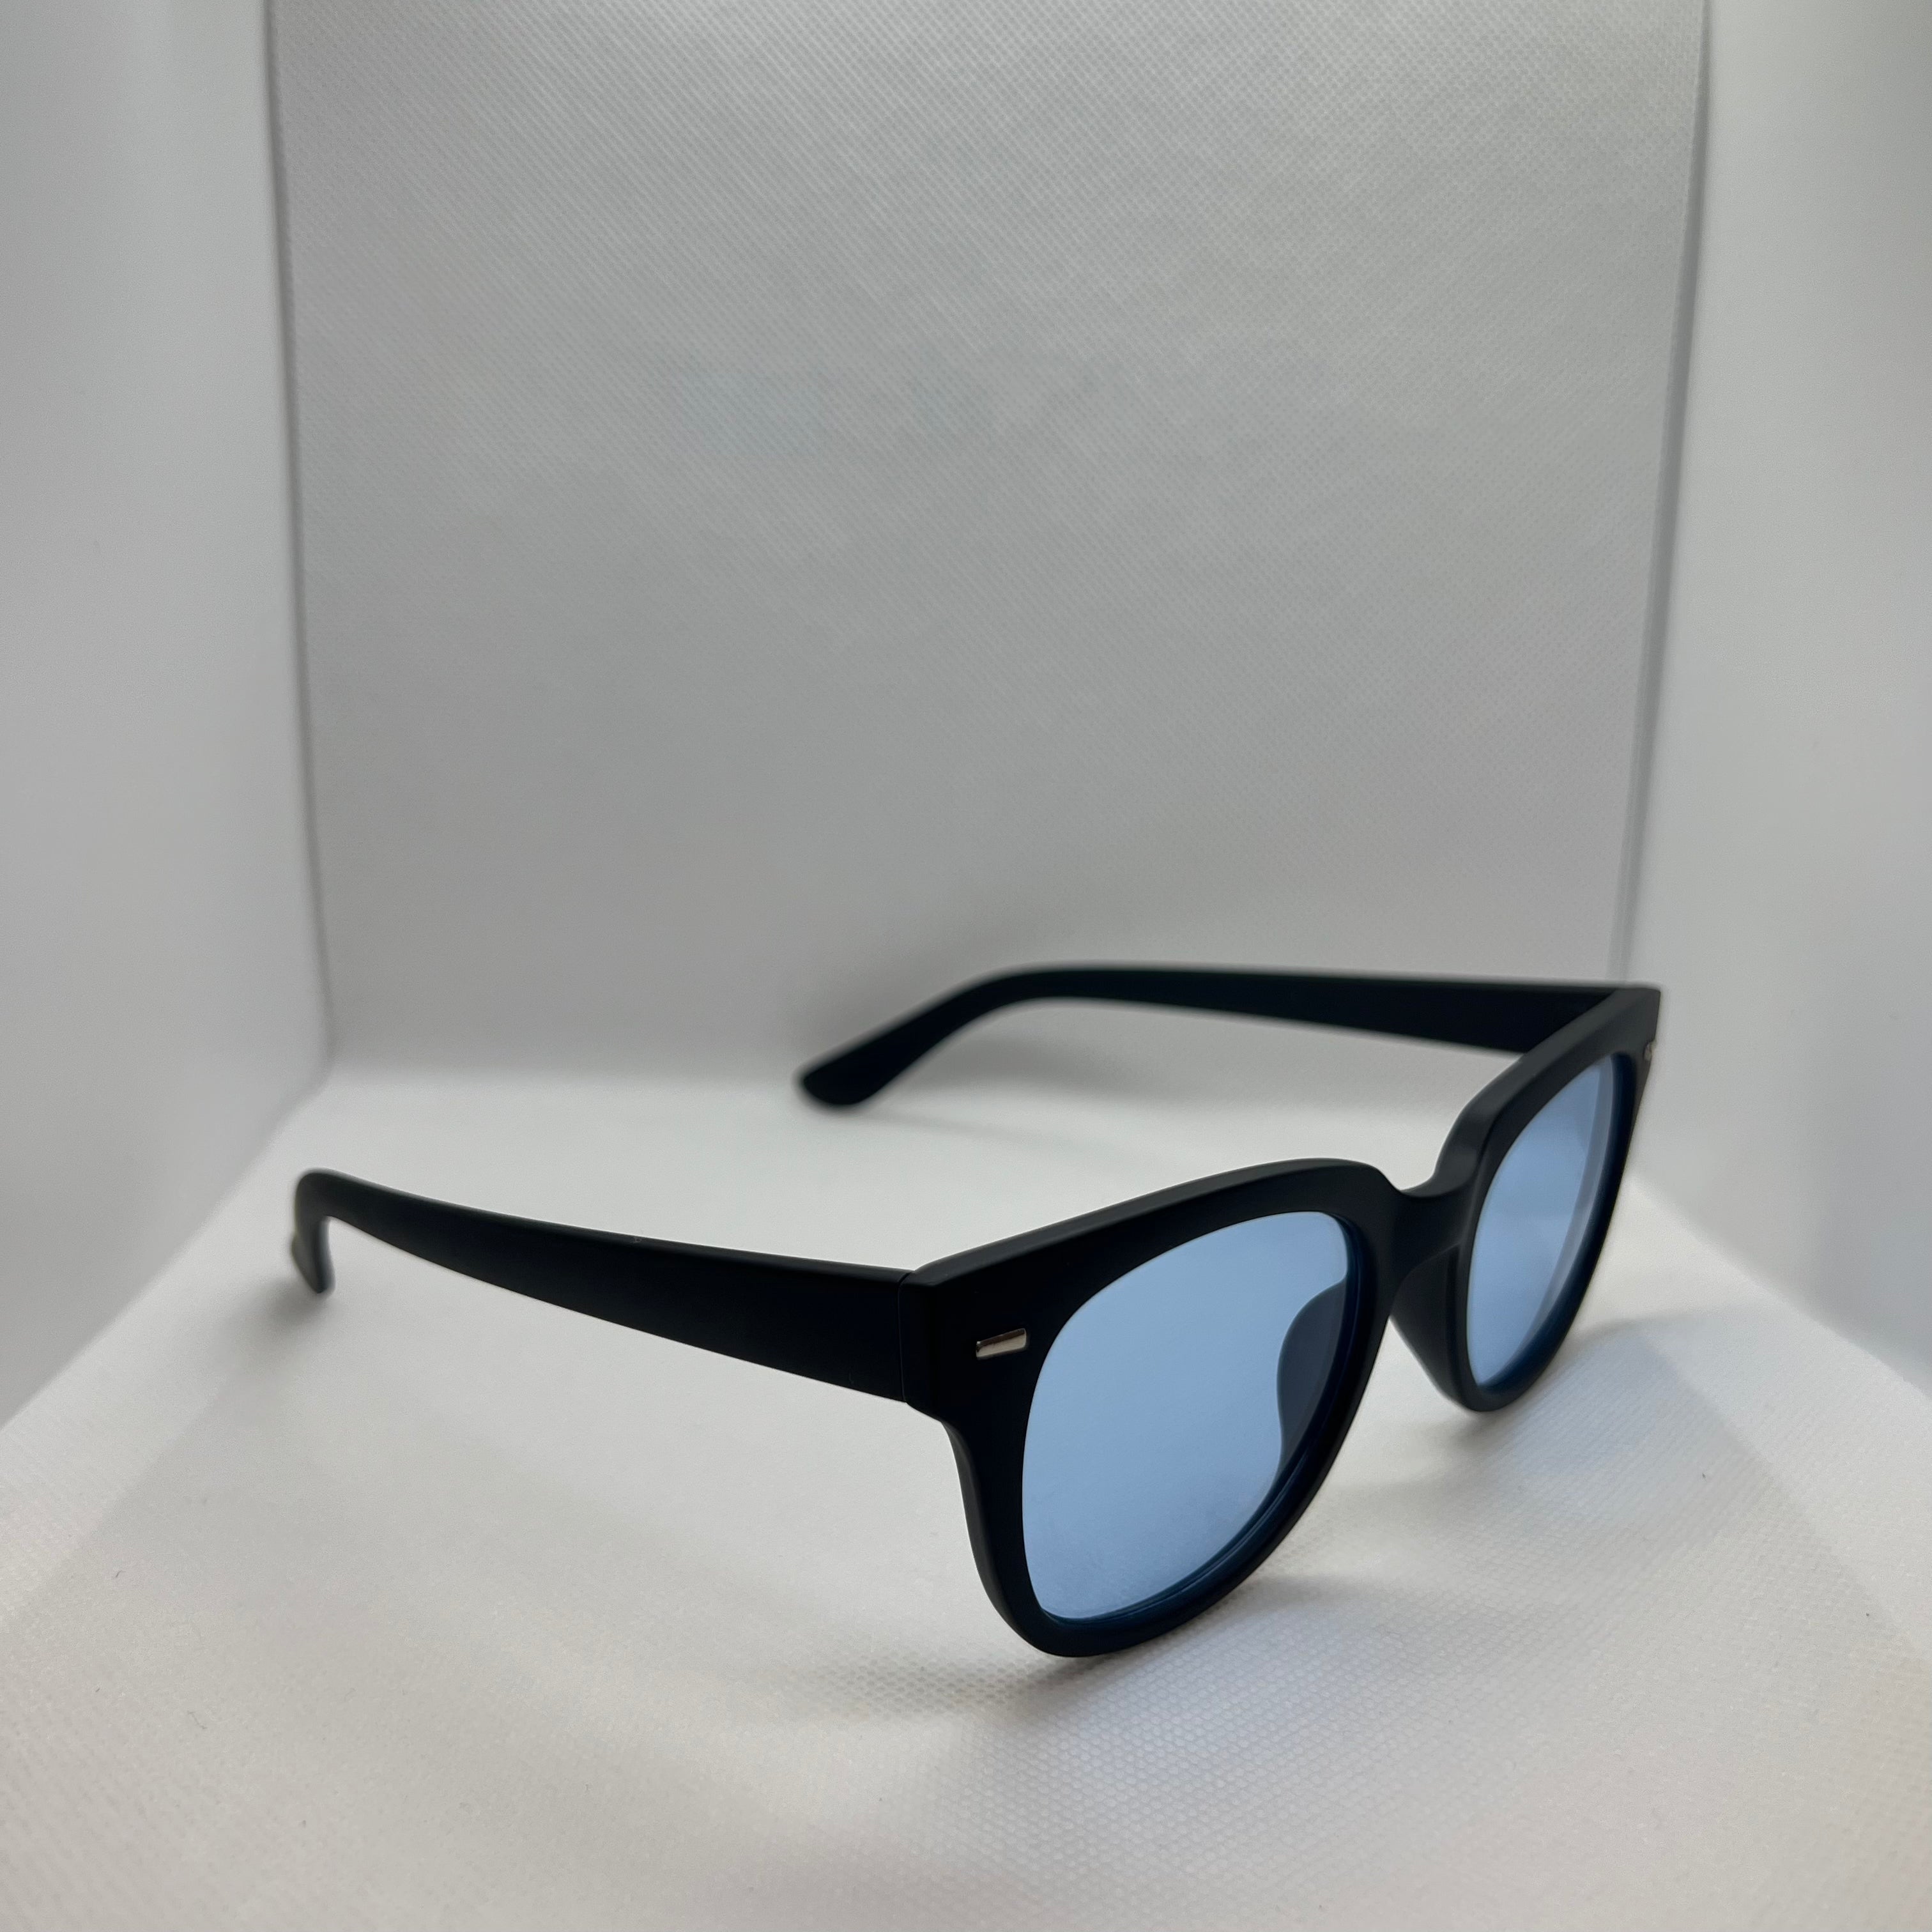 DENIS sunglasses Polarized lenses MATTBLACK